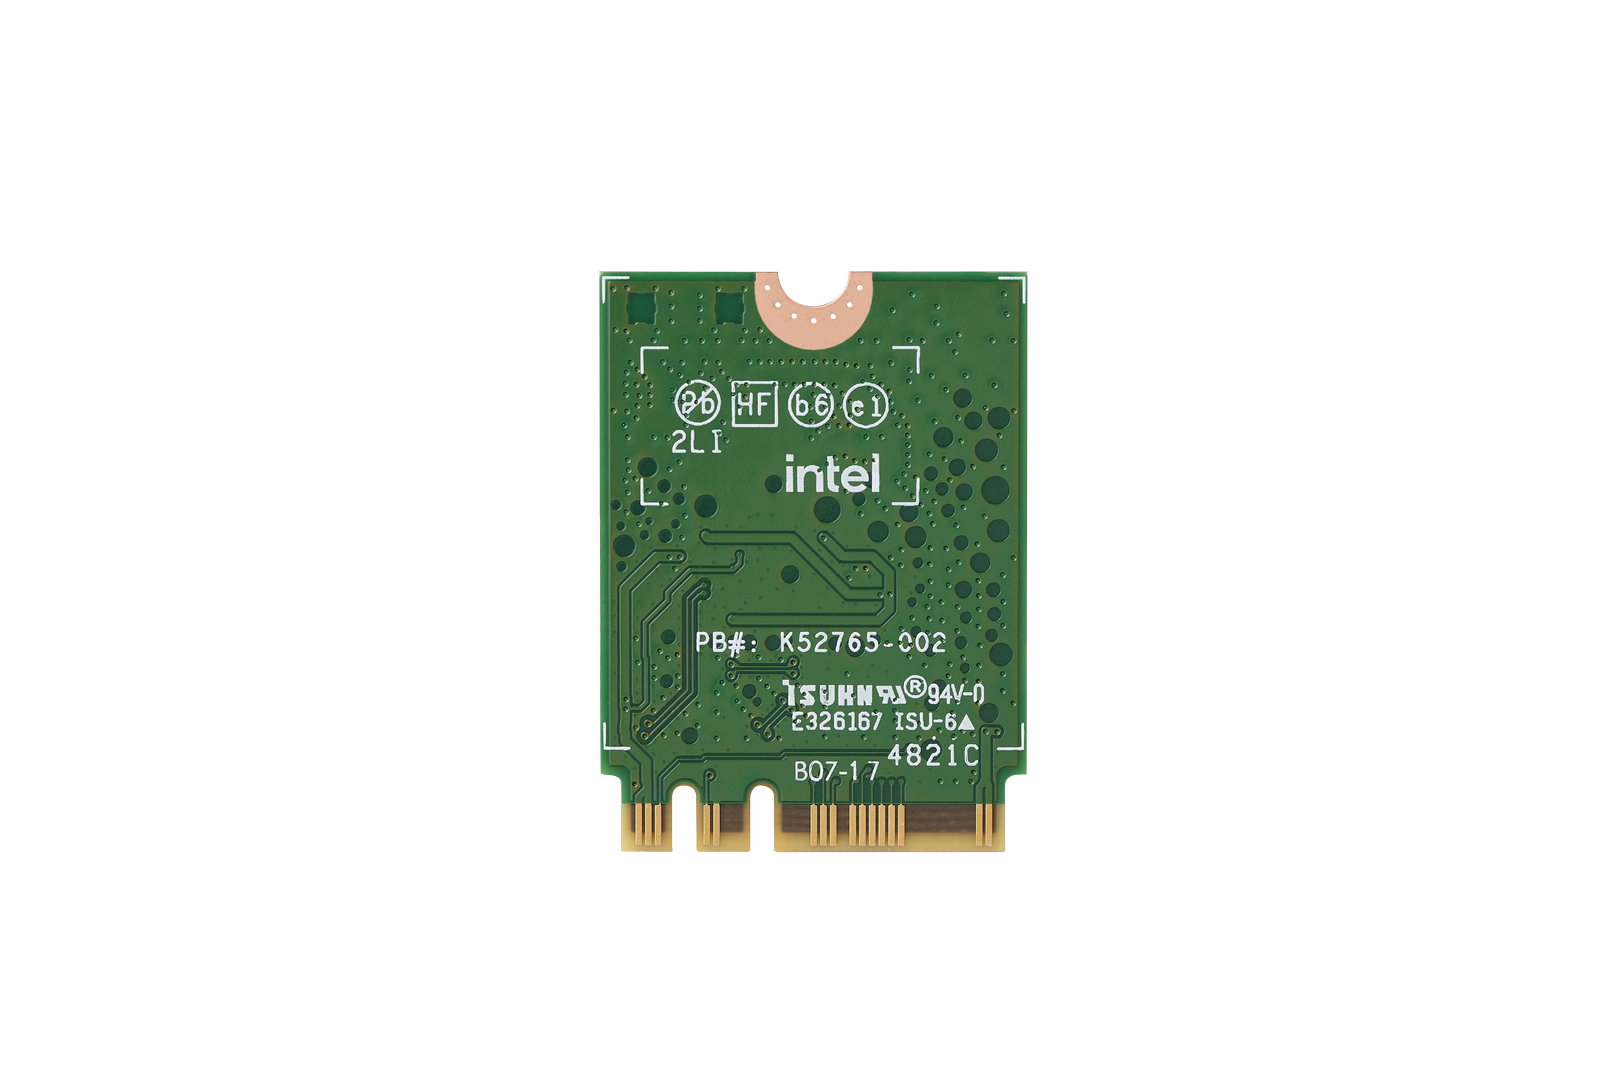 Intel Wi-Fi 6E AX210 M.2 Module – I-Pi SMARC